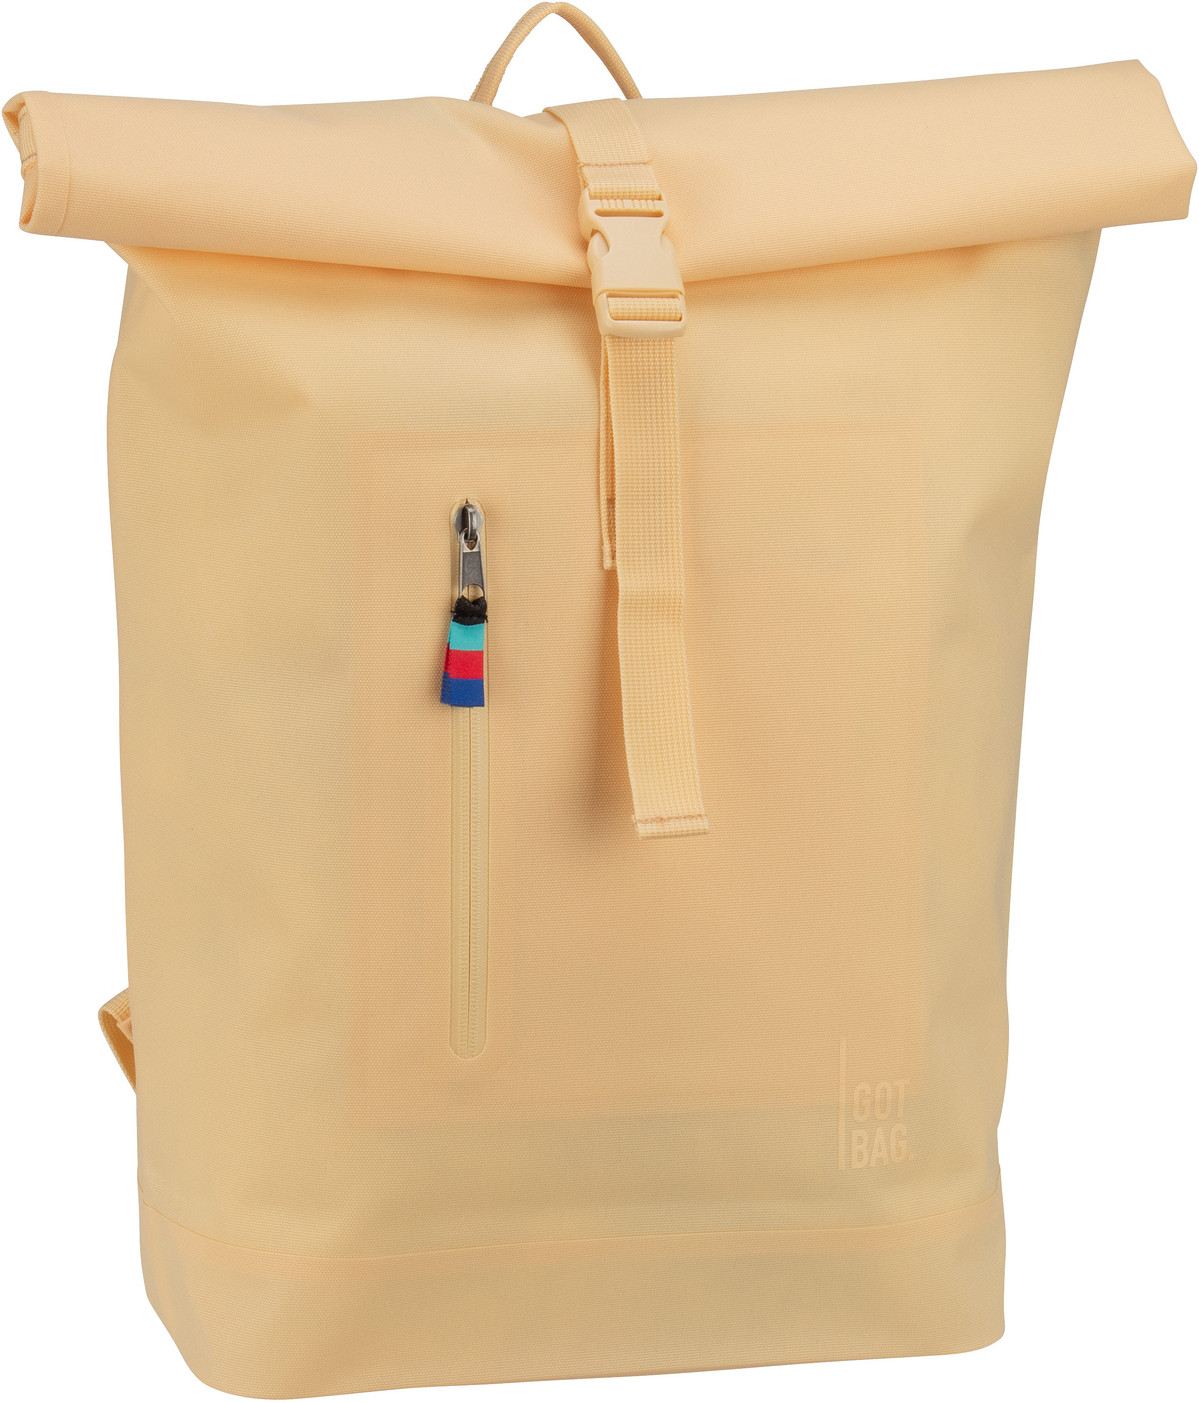 GOT BAG Rolltop Lite Backpack  in Starfish (26 Liter), Rolltop Rucksack